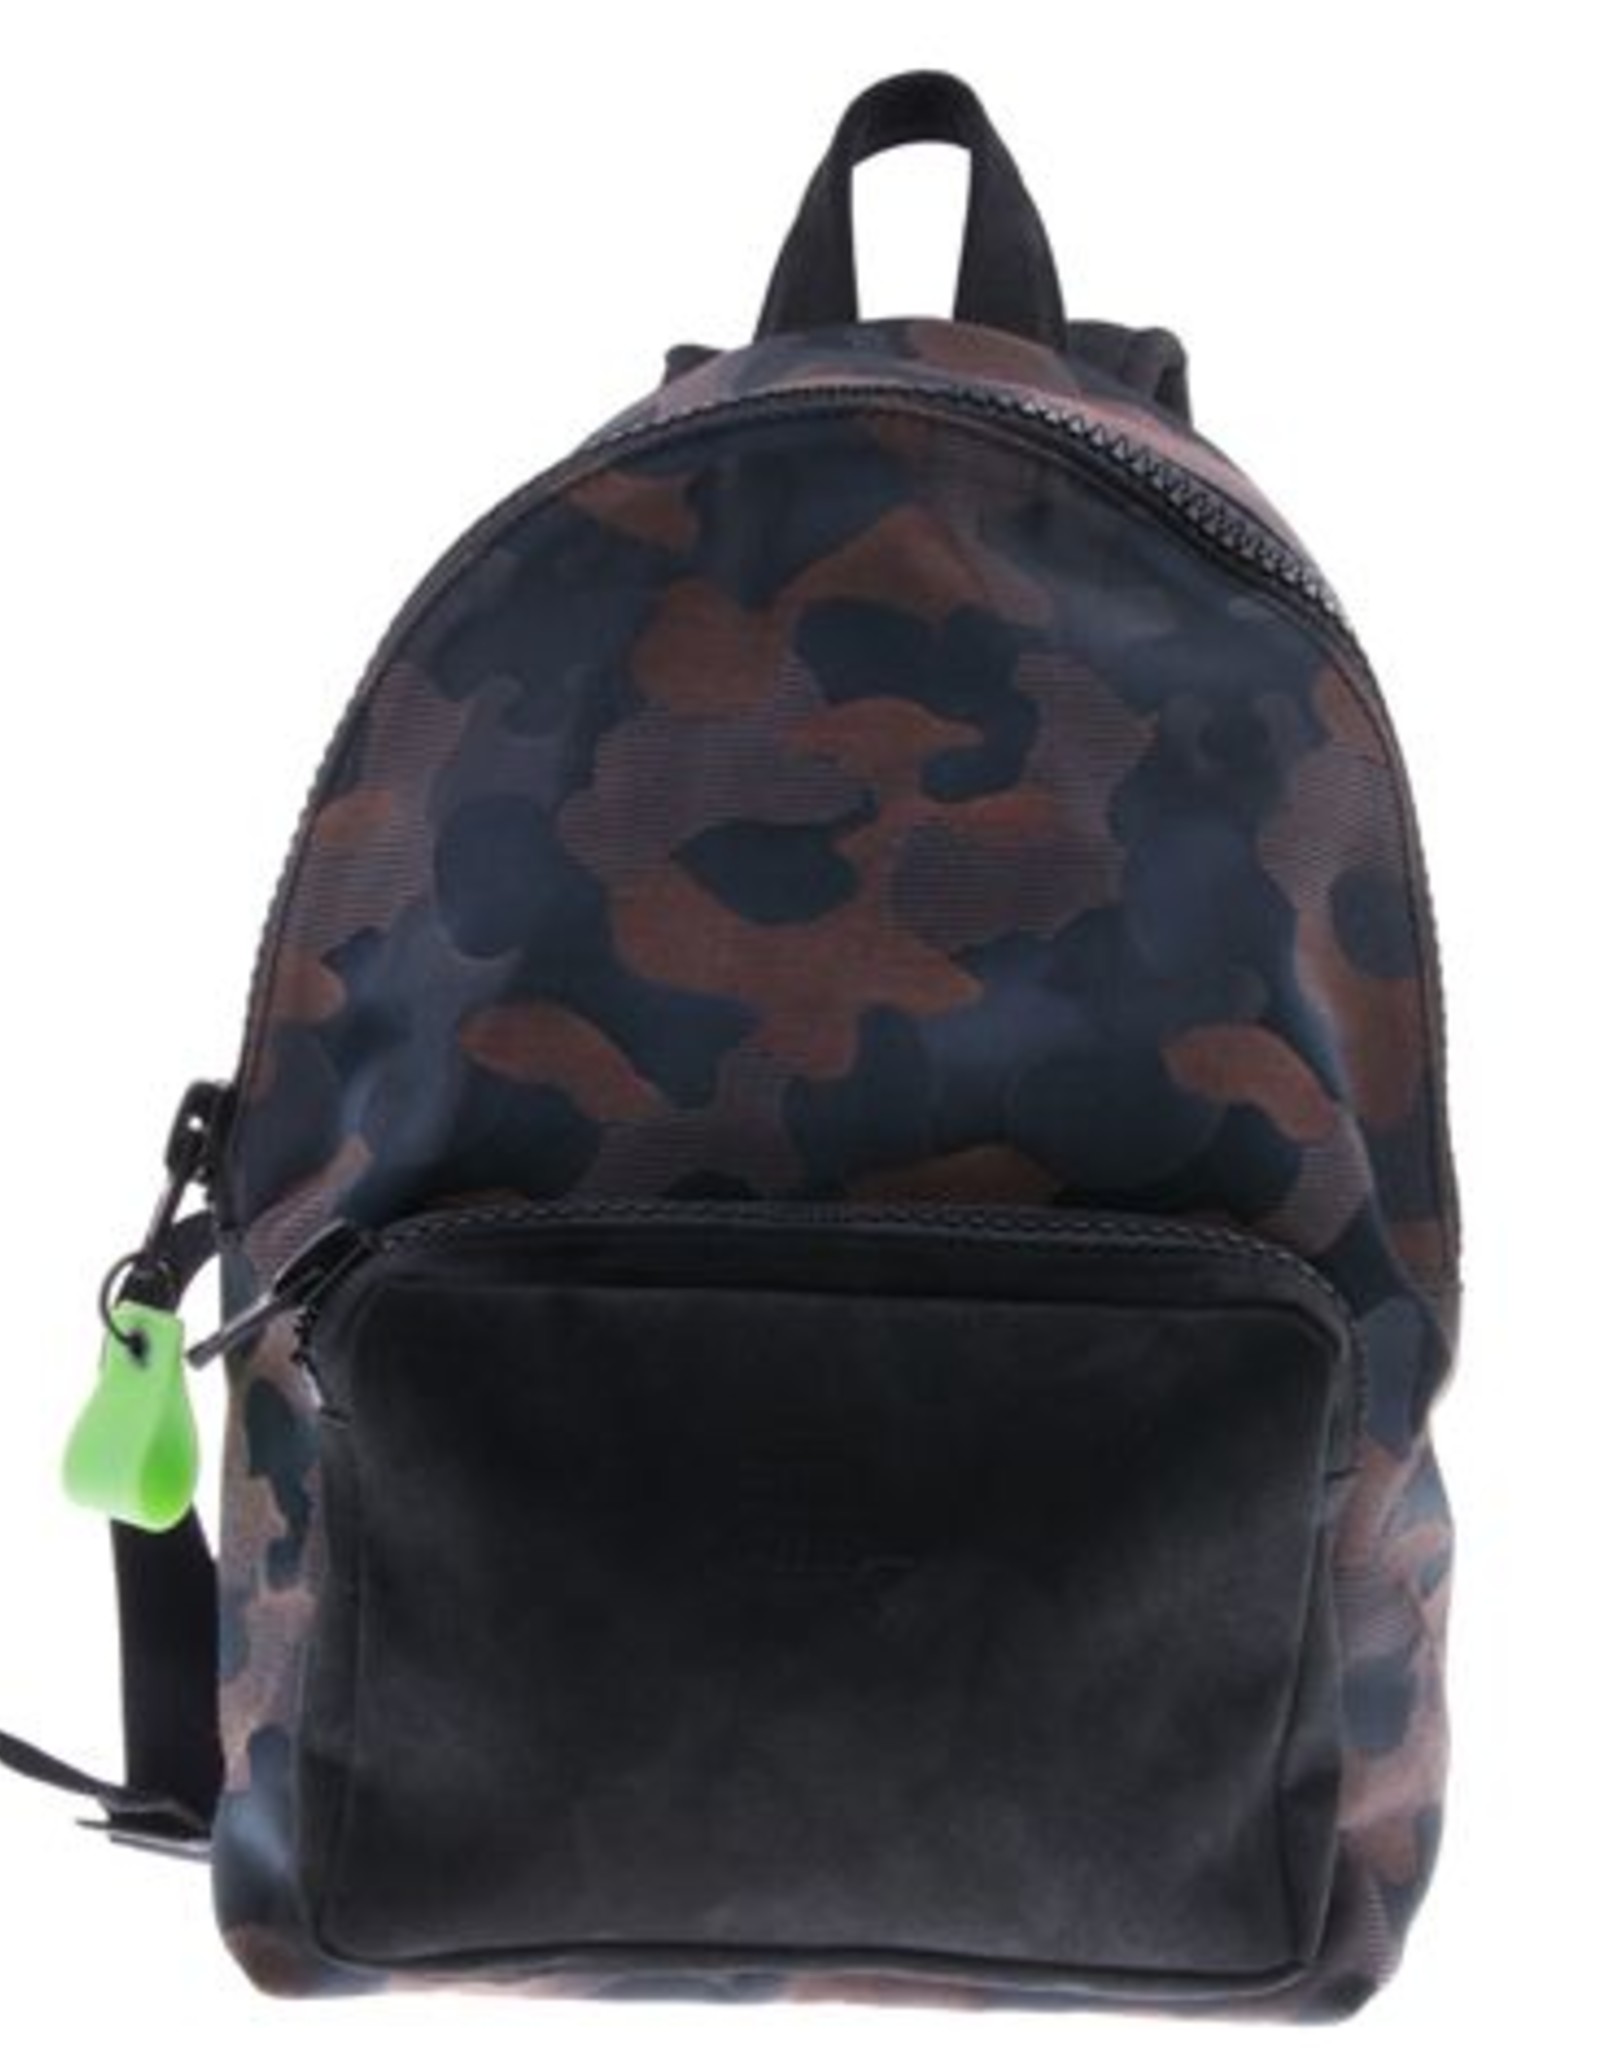 PRETTY&FAIR Bruine fantasy backpack - Fantasy brown